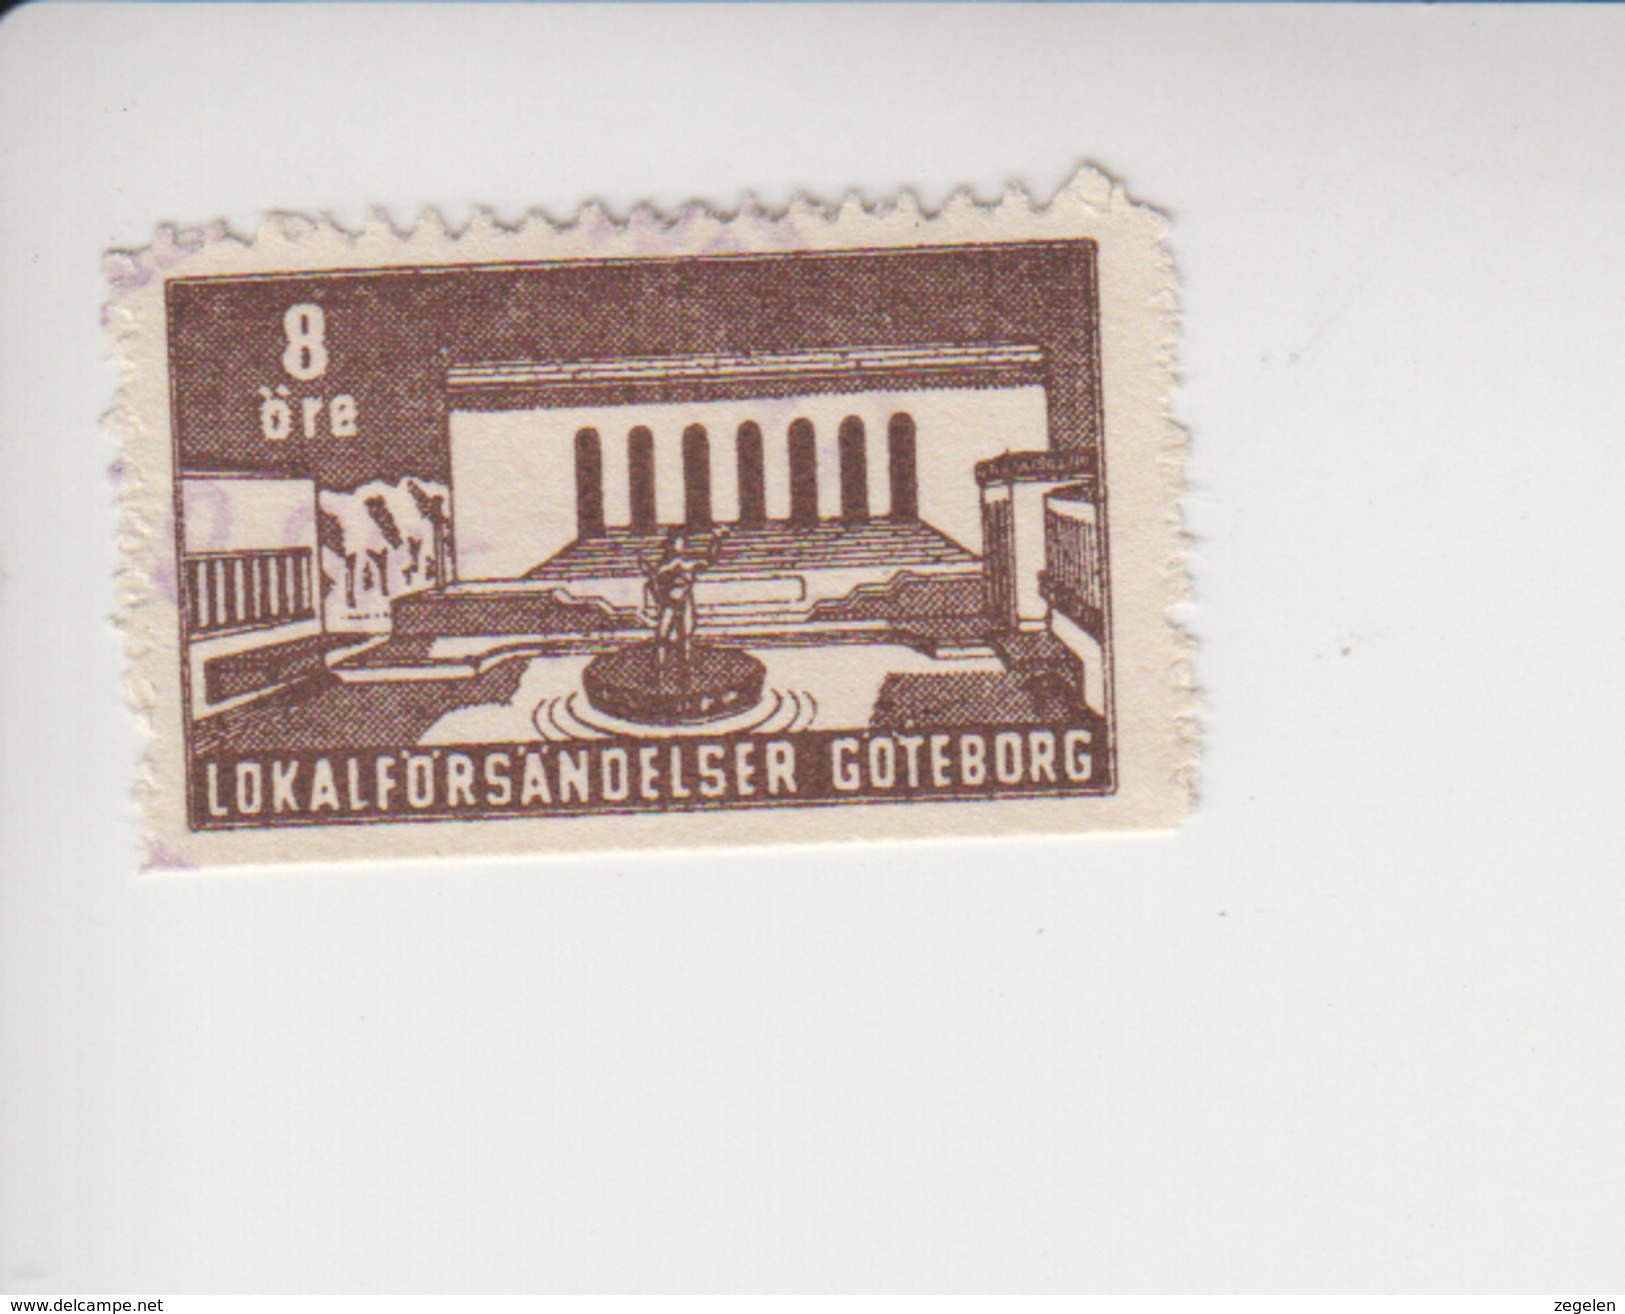 Zweden Lokale Post Facit-cataloog Göteborg Lokalförsändelser 15B - Local Post Stamps